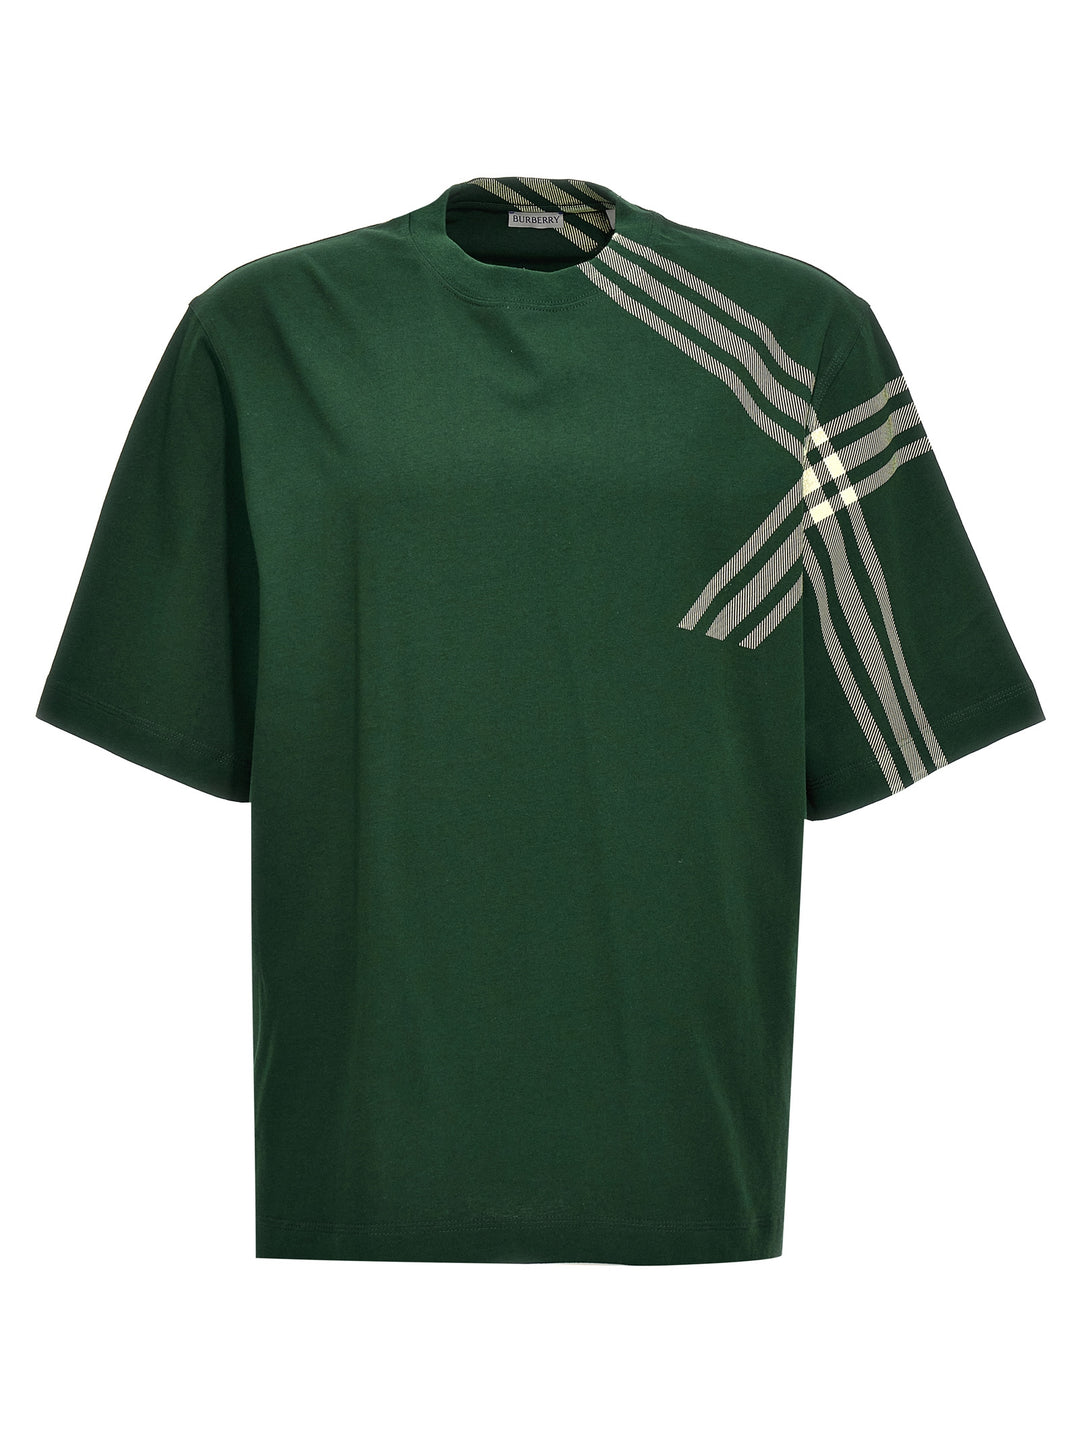 Tops T Shirt Verde